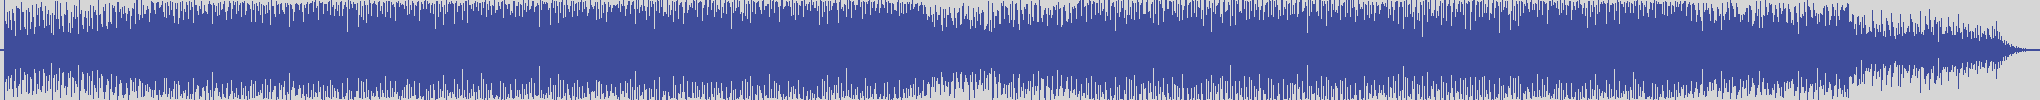 nf_boyz_records [NFY003] Frantic Slag - The Fabulous [House Attitude Mix] audio wave form